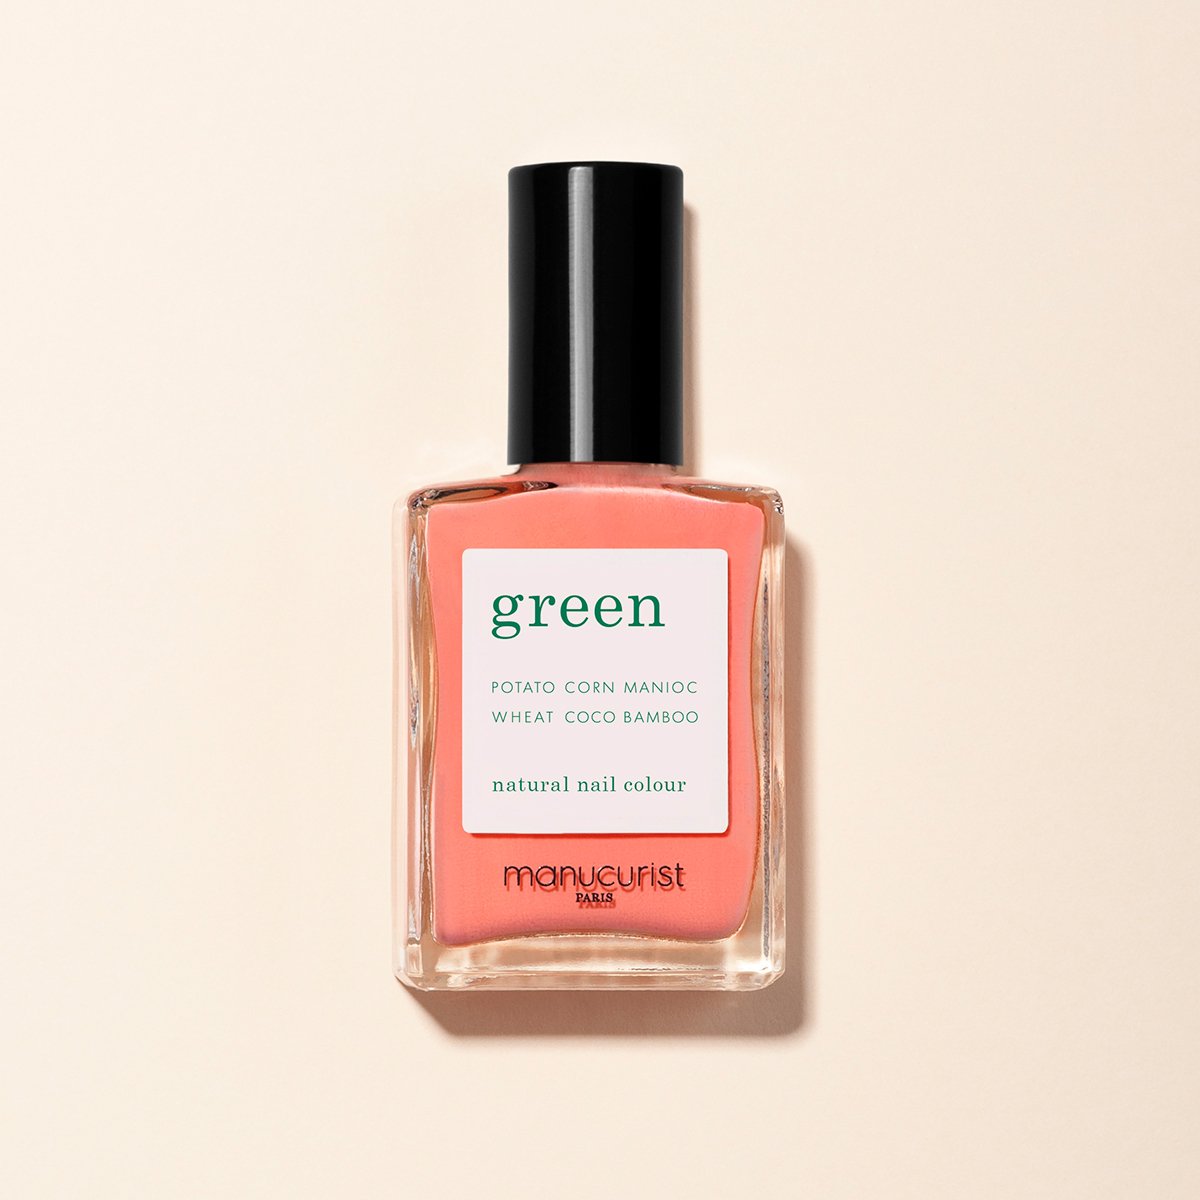 manucurist(マニキュリスト) green nail polish バードオブパラダイス 31030 [Vegan] 15ml【ネコポス便/送料無料】